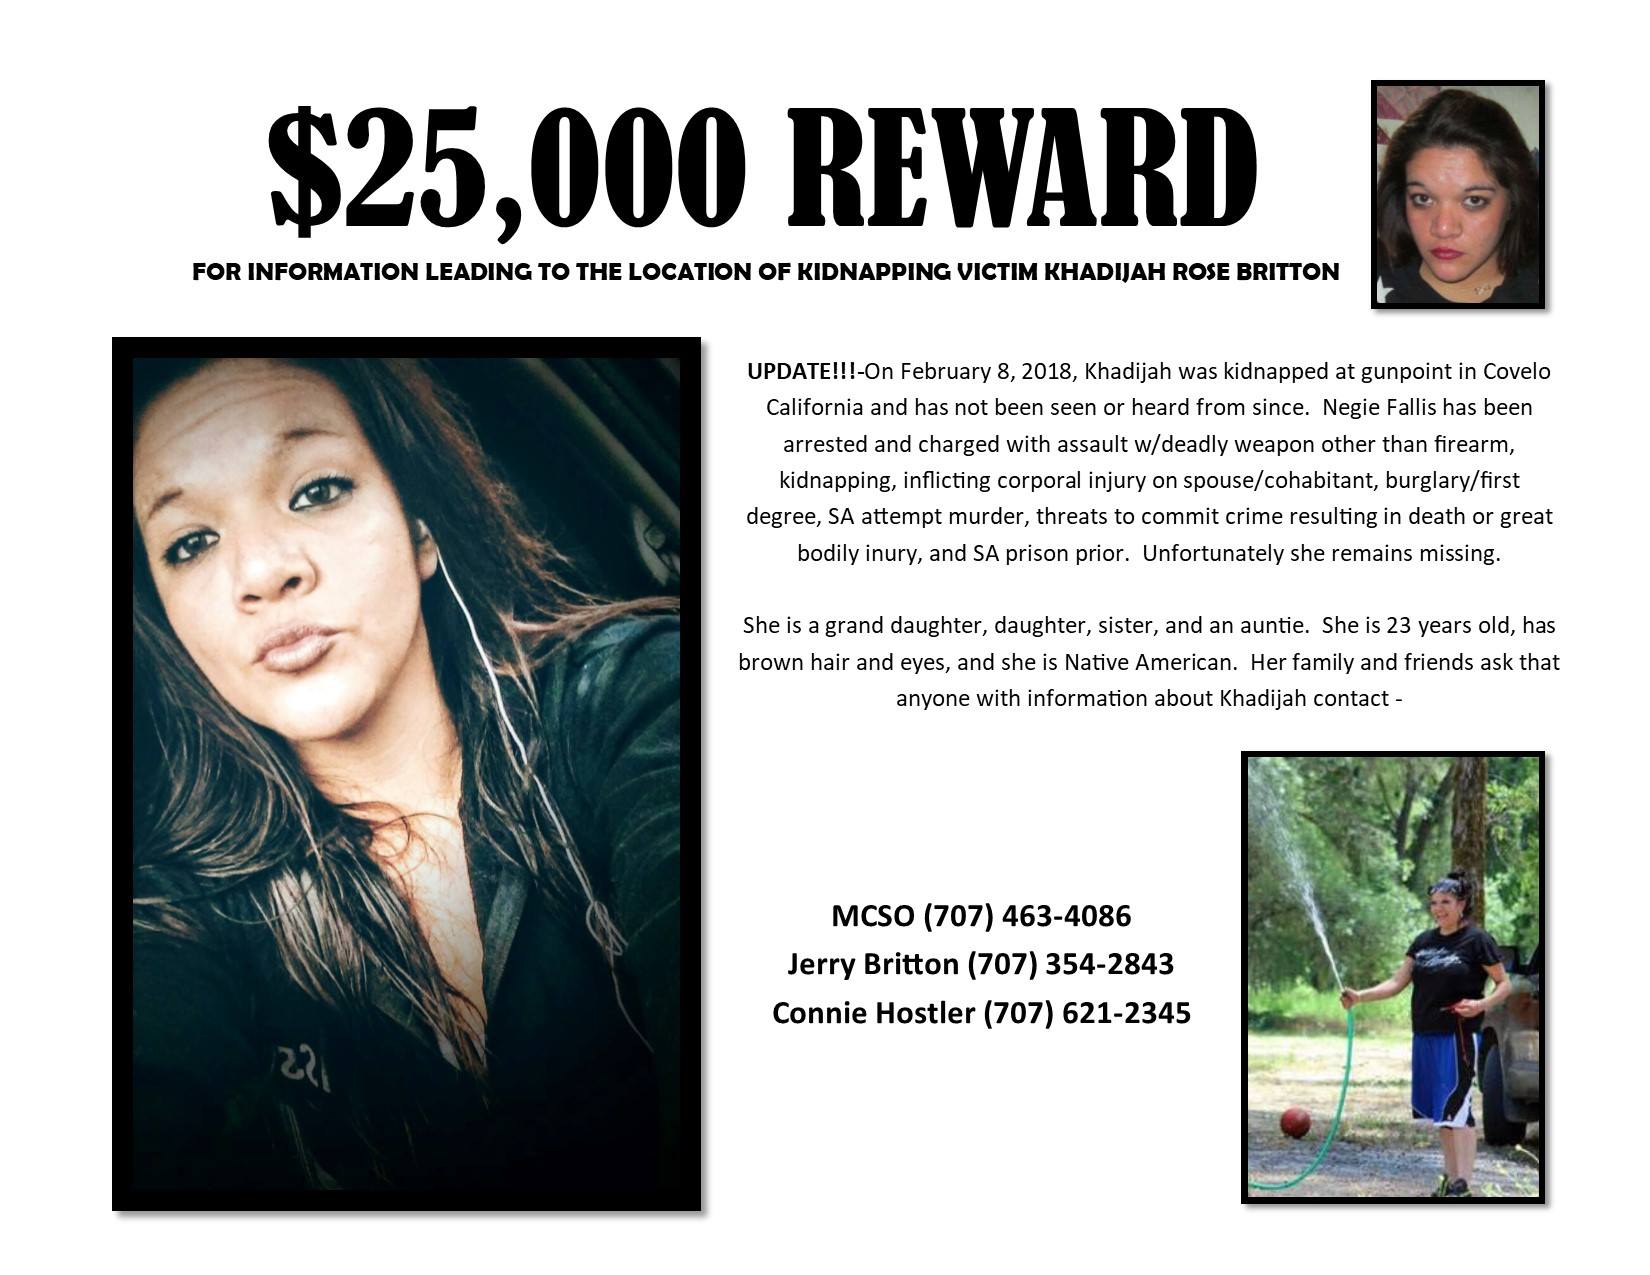 The reward has been raised to $25,000 to find Khadijah Britton.